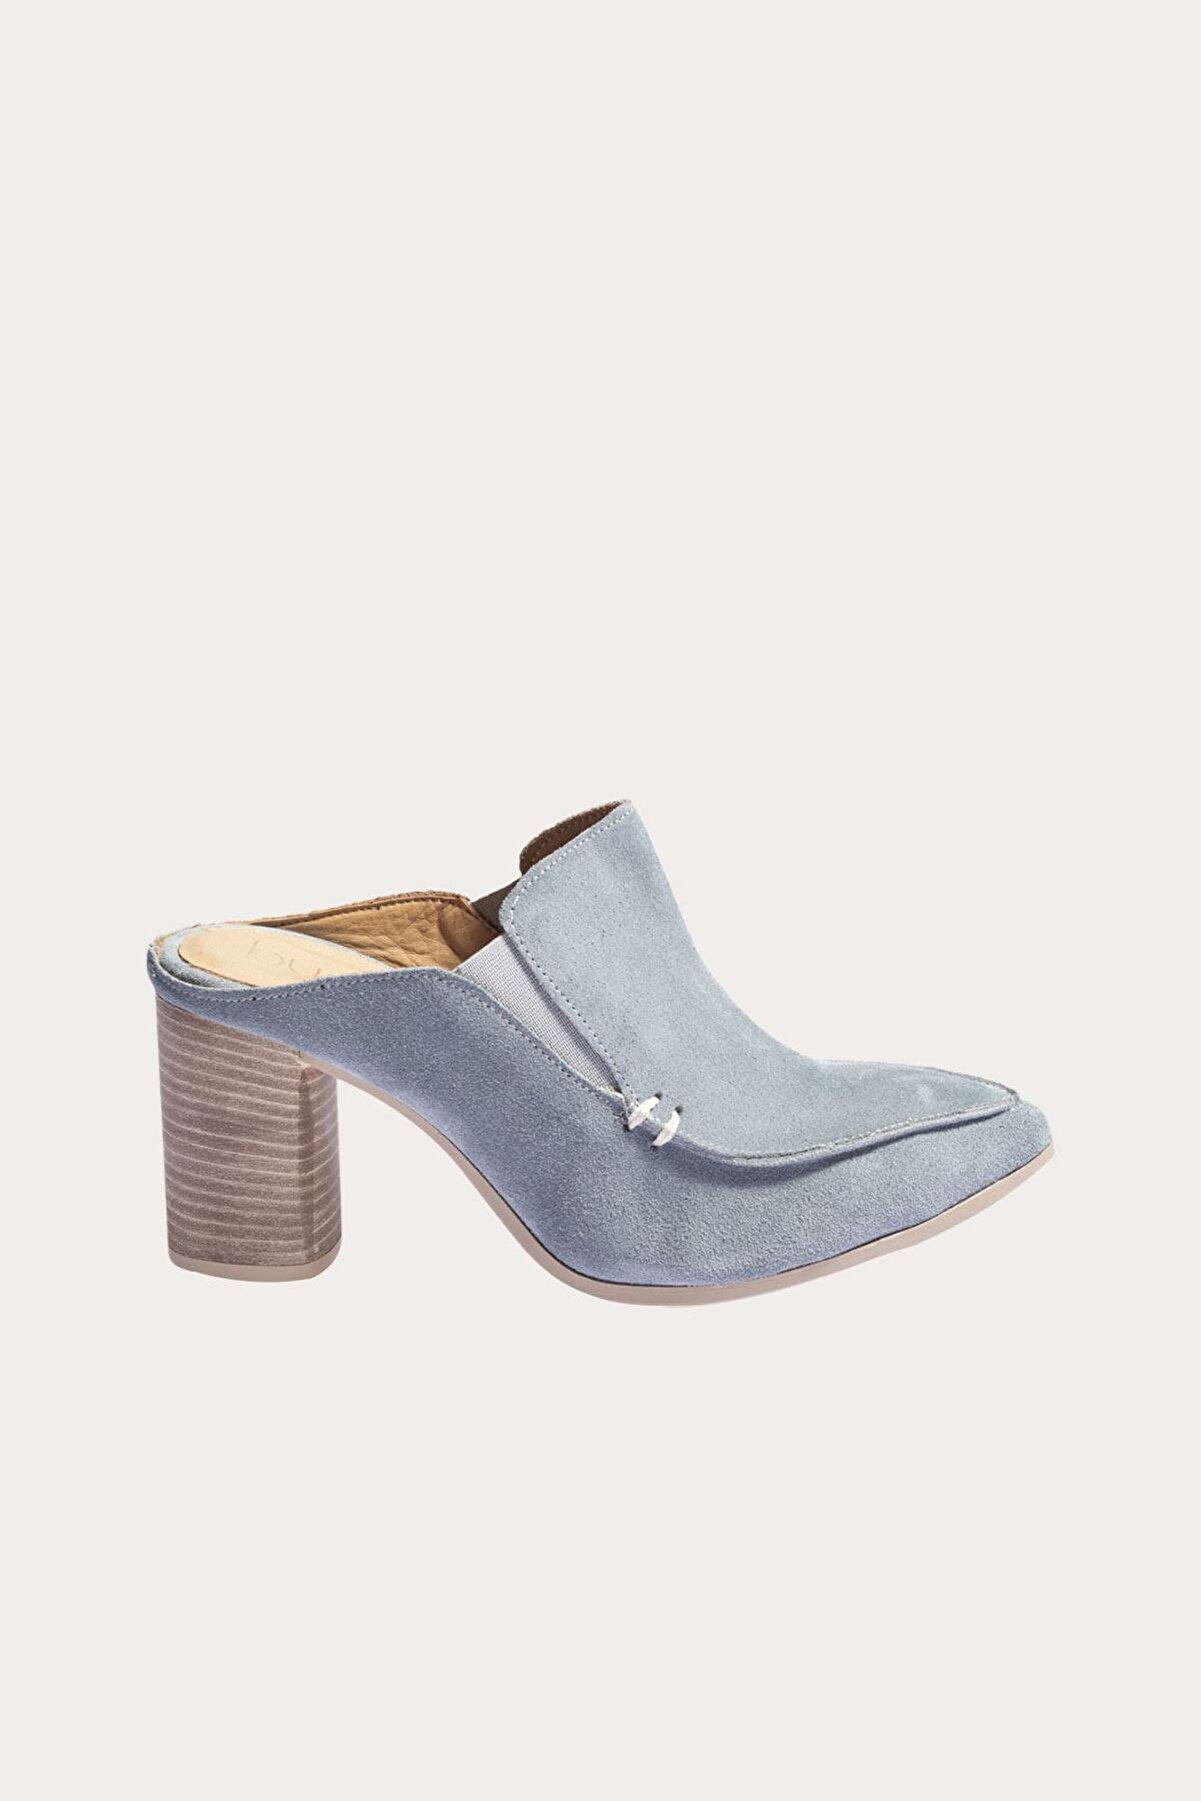 BUENO Shoes Mavi Süet Kadın Topuklu Terlik